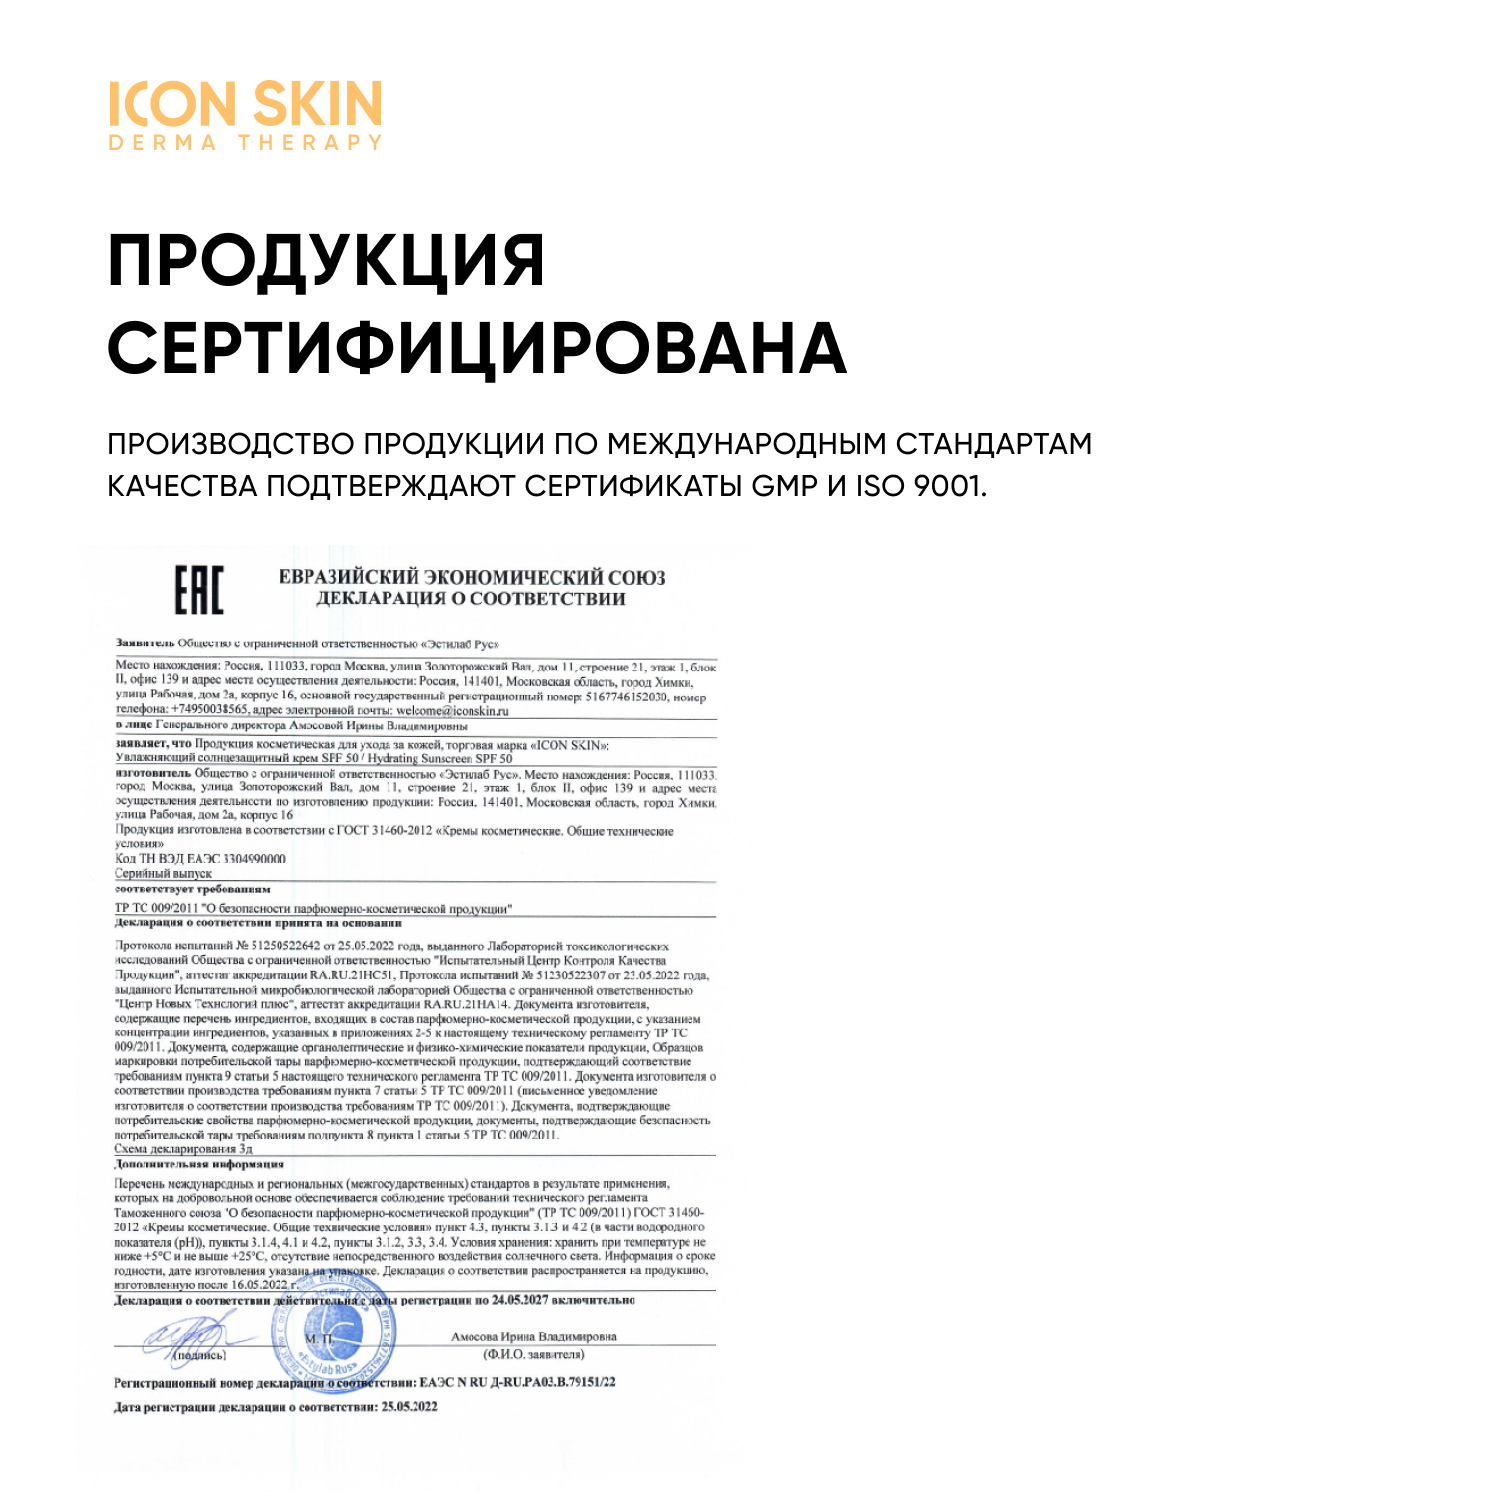 Солнцезащитный крем для лица ICON SKIN SPF 50 увлажняющий для всех типов кожи 50 мл - фото 8